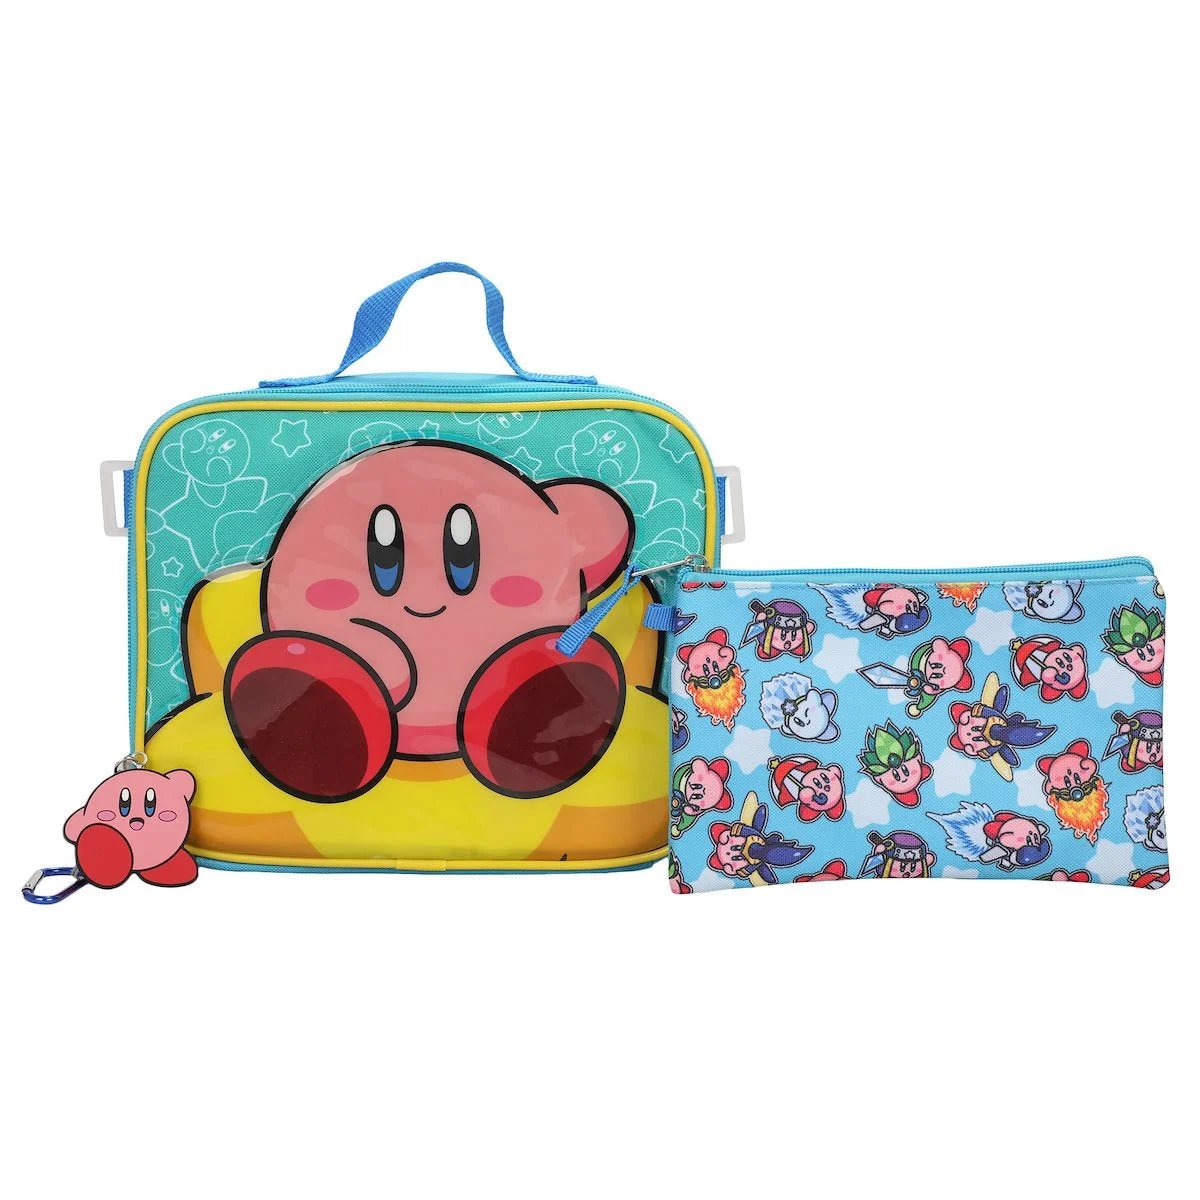 Bioworld - Kirby Backpack 5-Piece Set - Good Game Anime